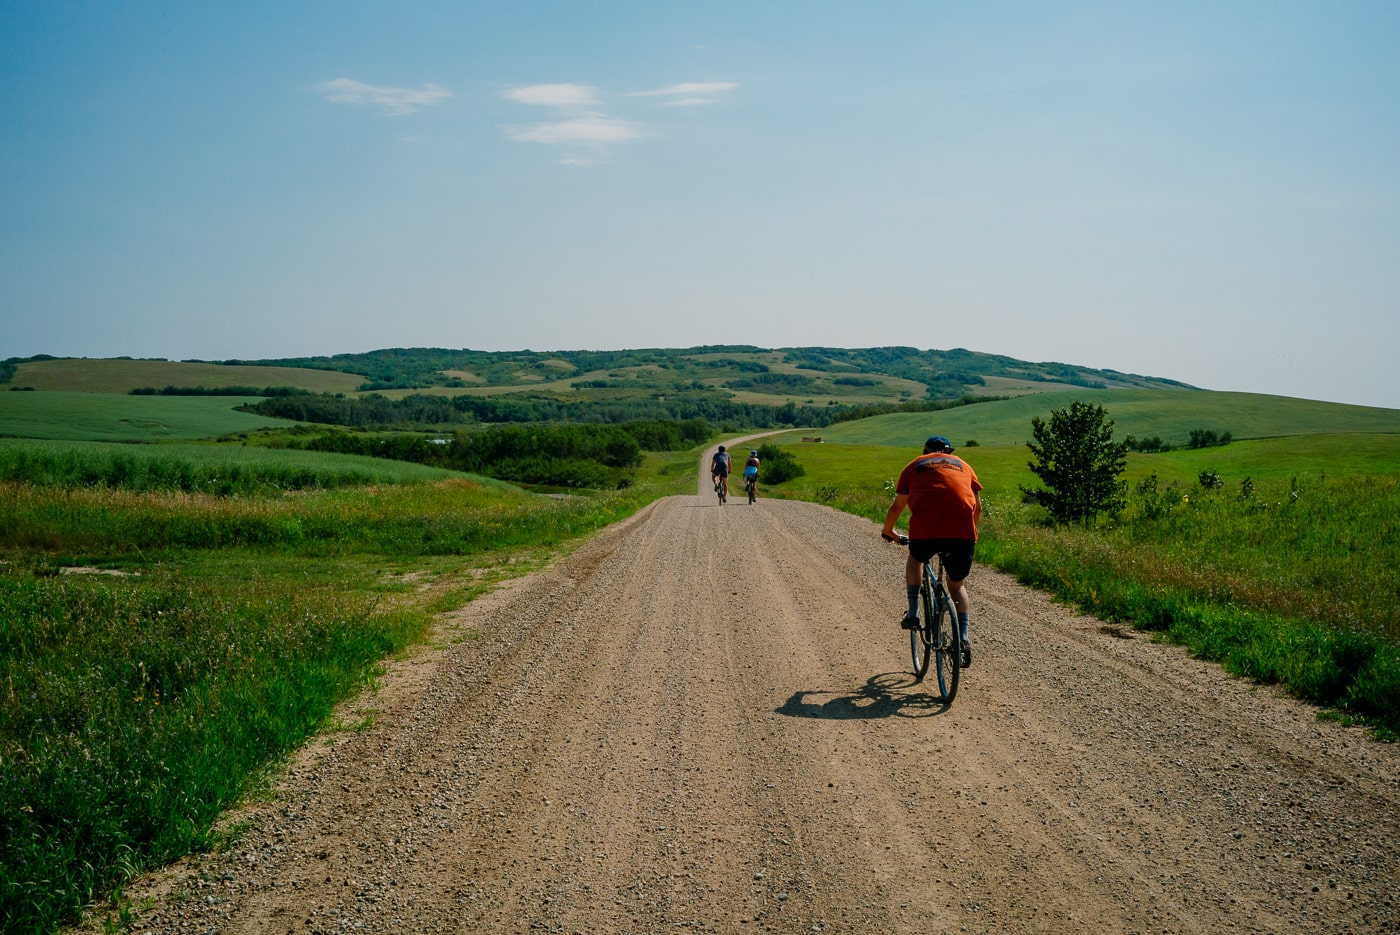 Man riding bike down dirt road in Saskatchewan.